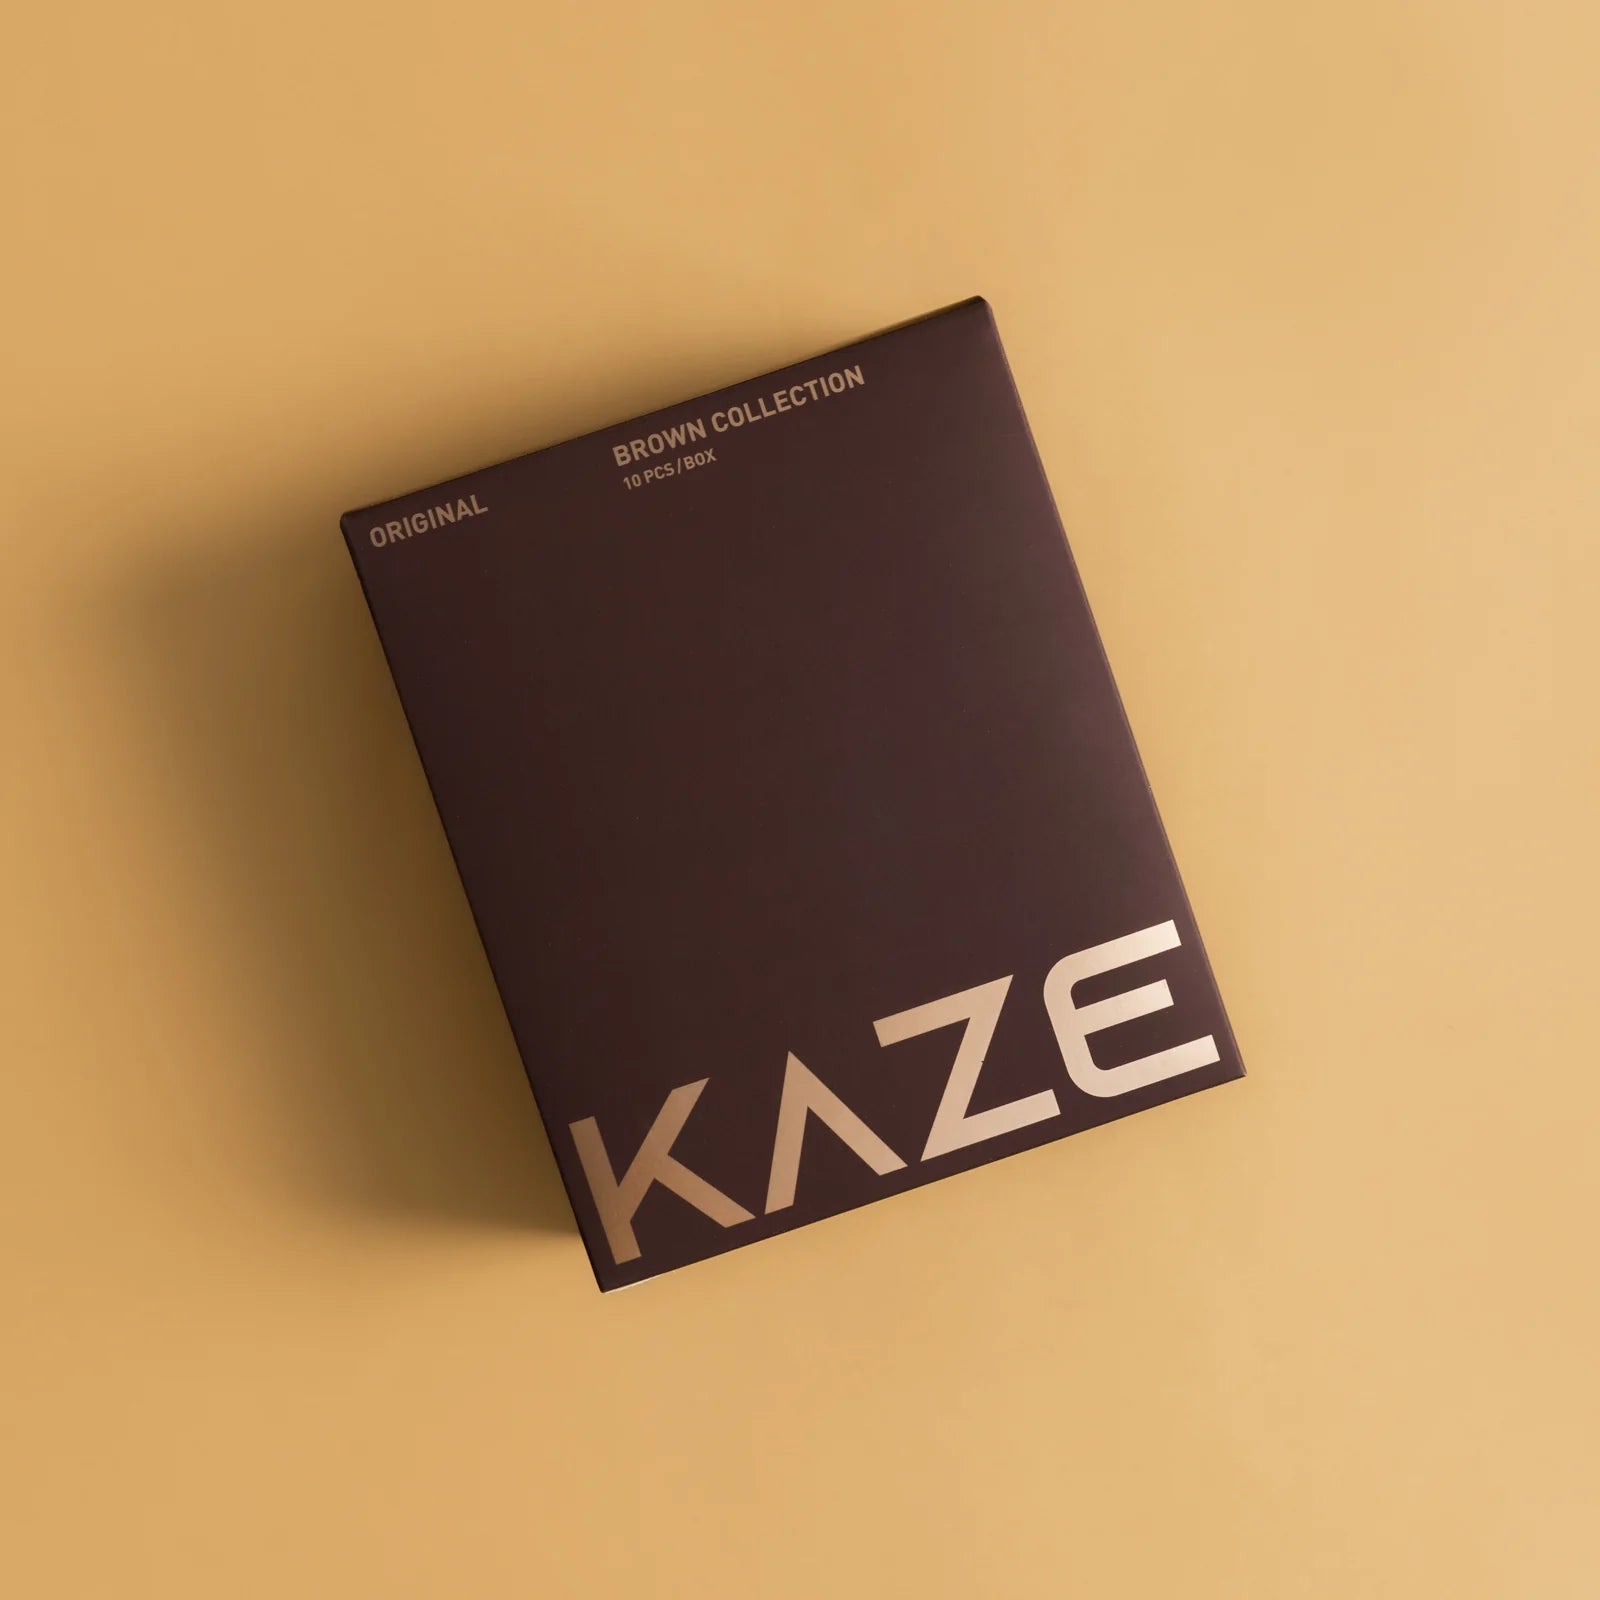 KAZE Masks- Brown Collection